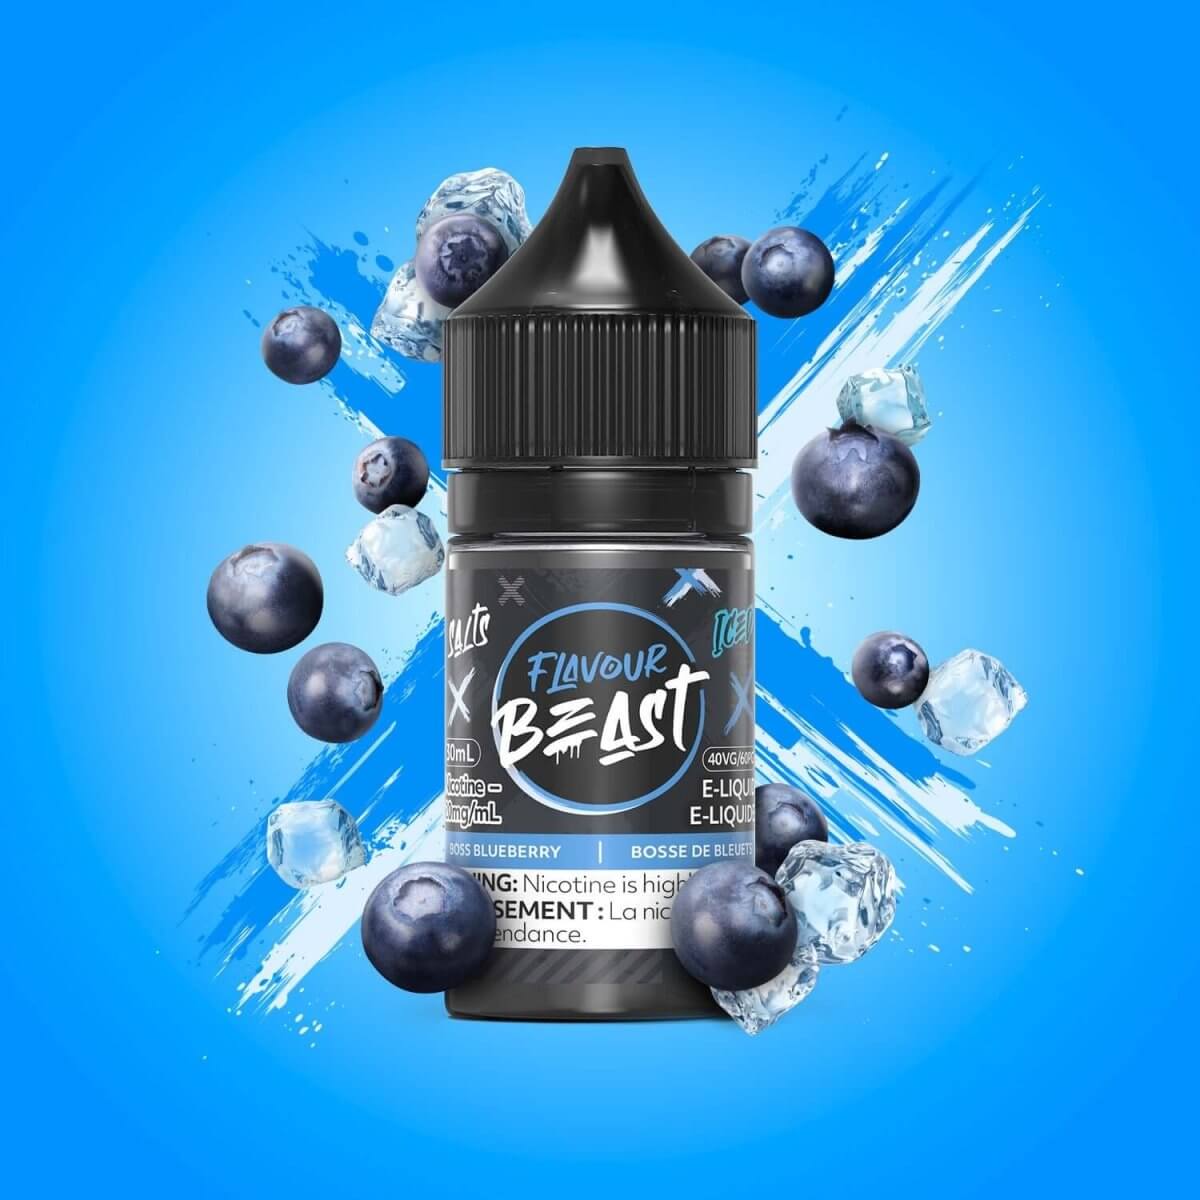 Flavour Beast E-Liquid - 437 VAPES